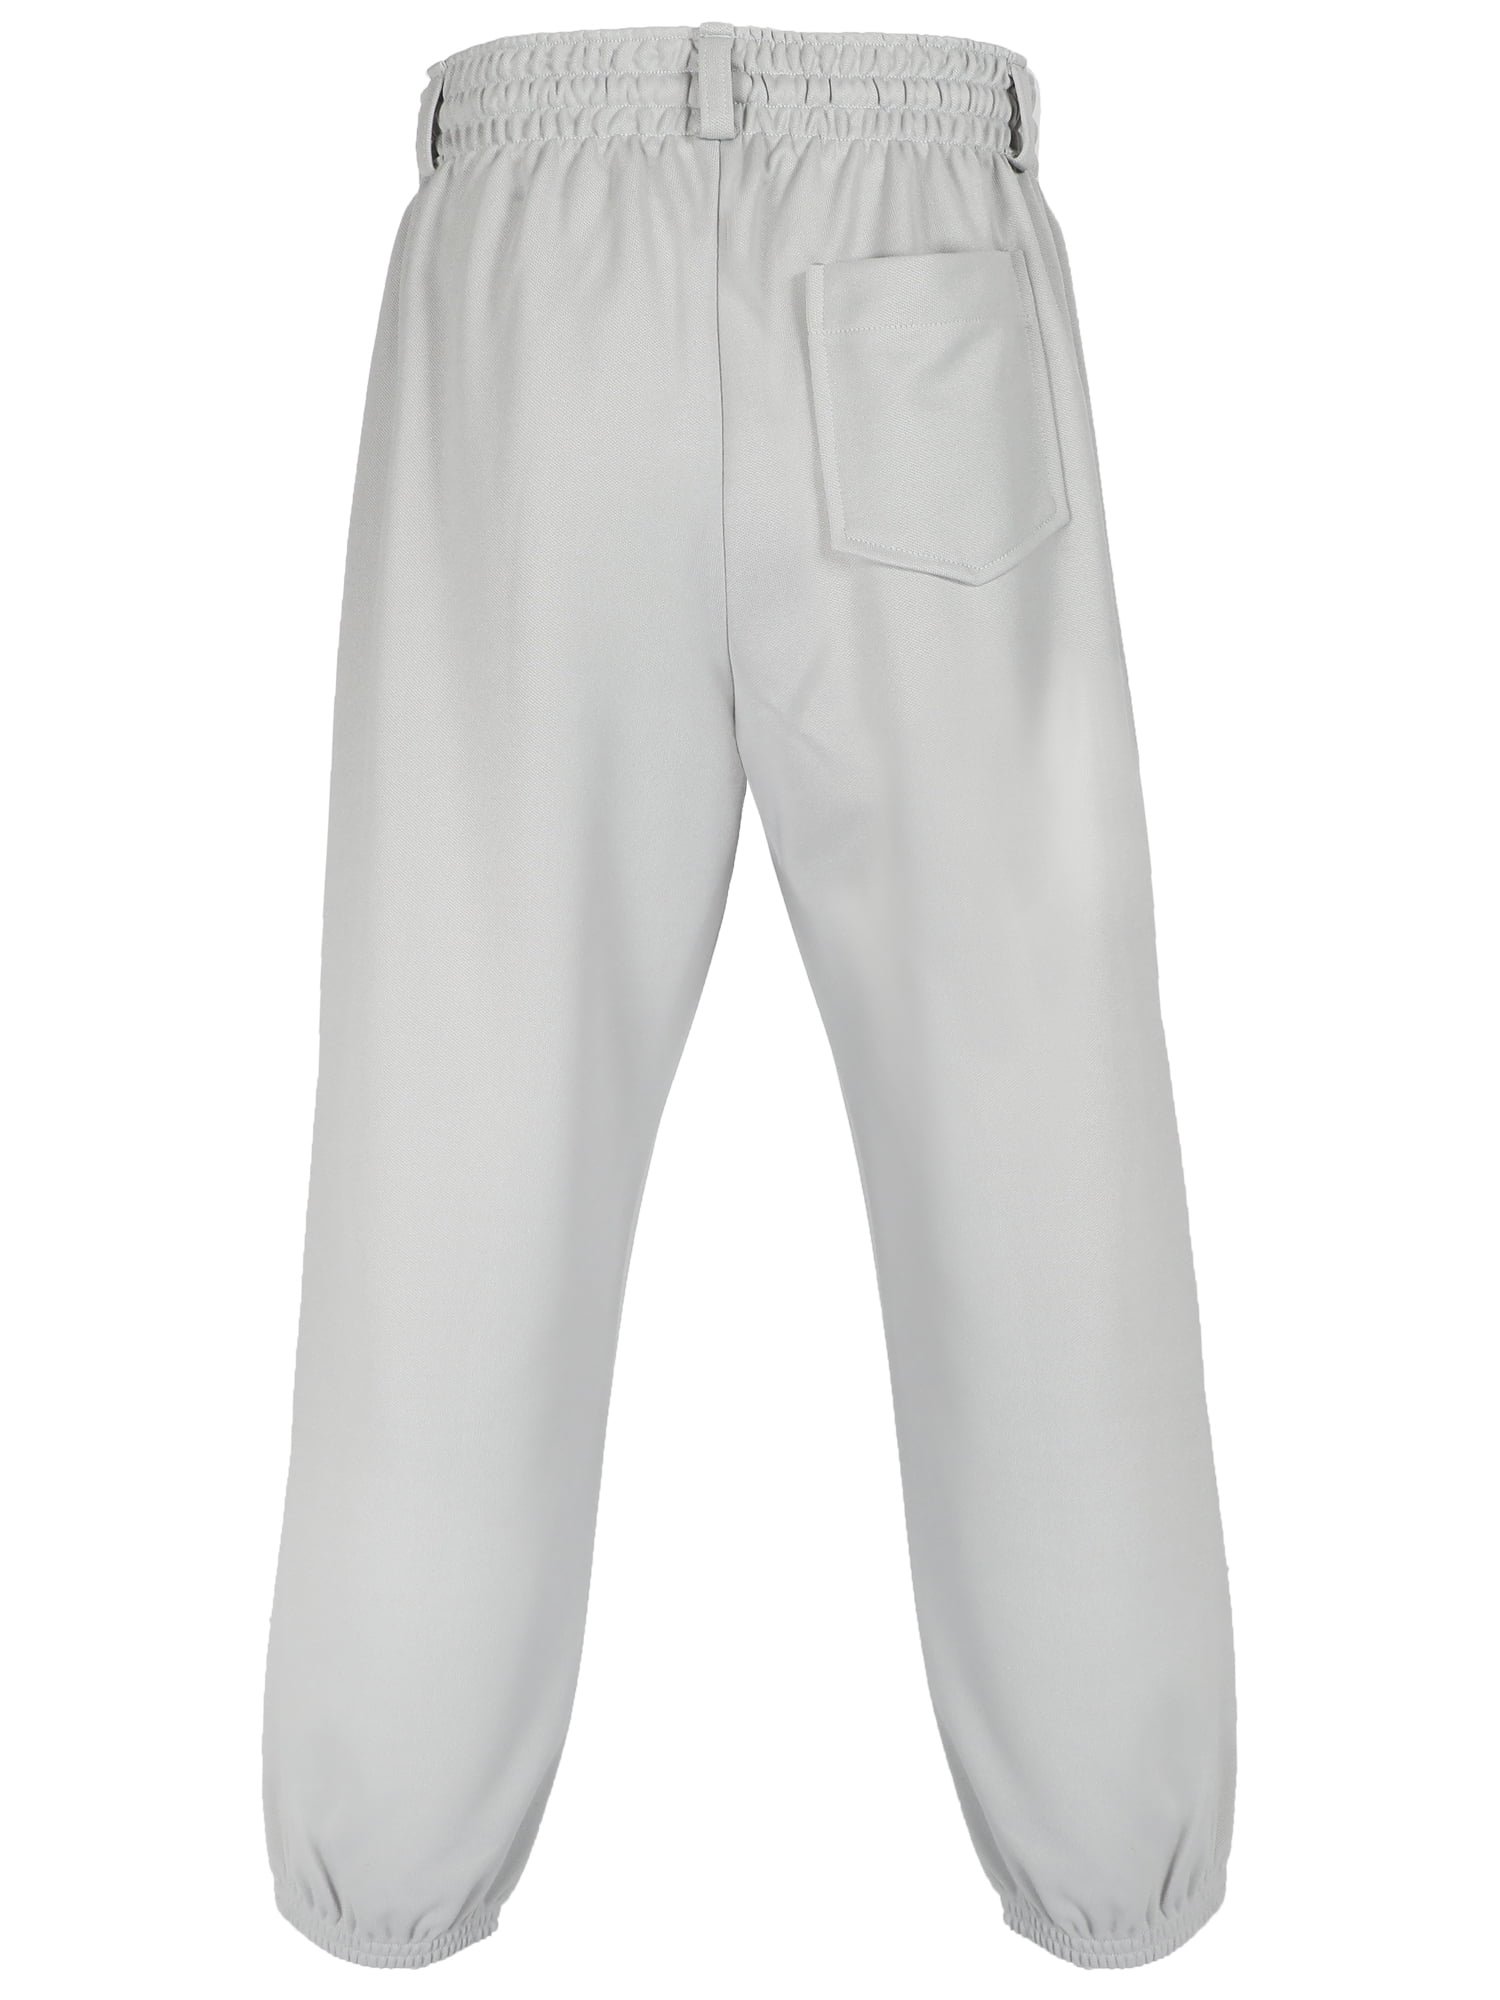 Base ball Baseball Pants Youth Boys Grey Gray Polyester Pullup 1X NEW XL 